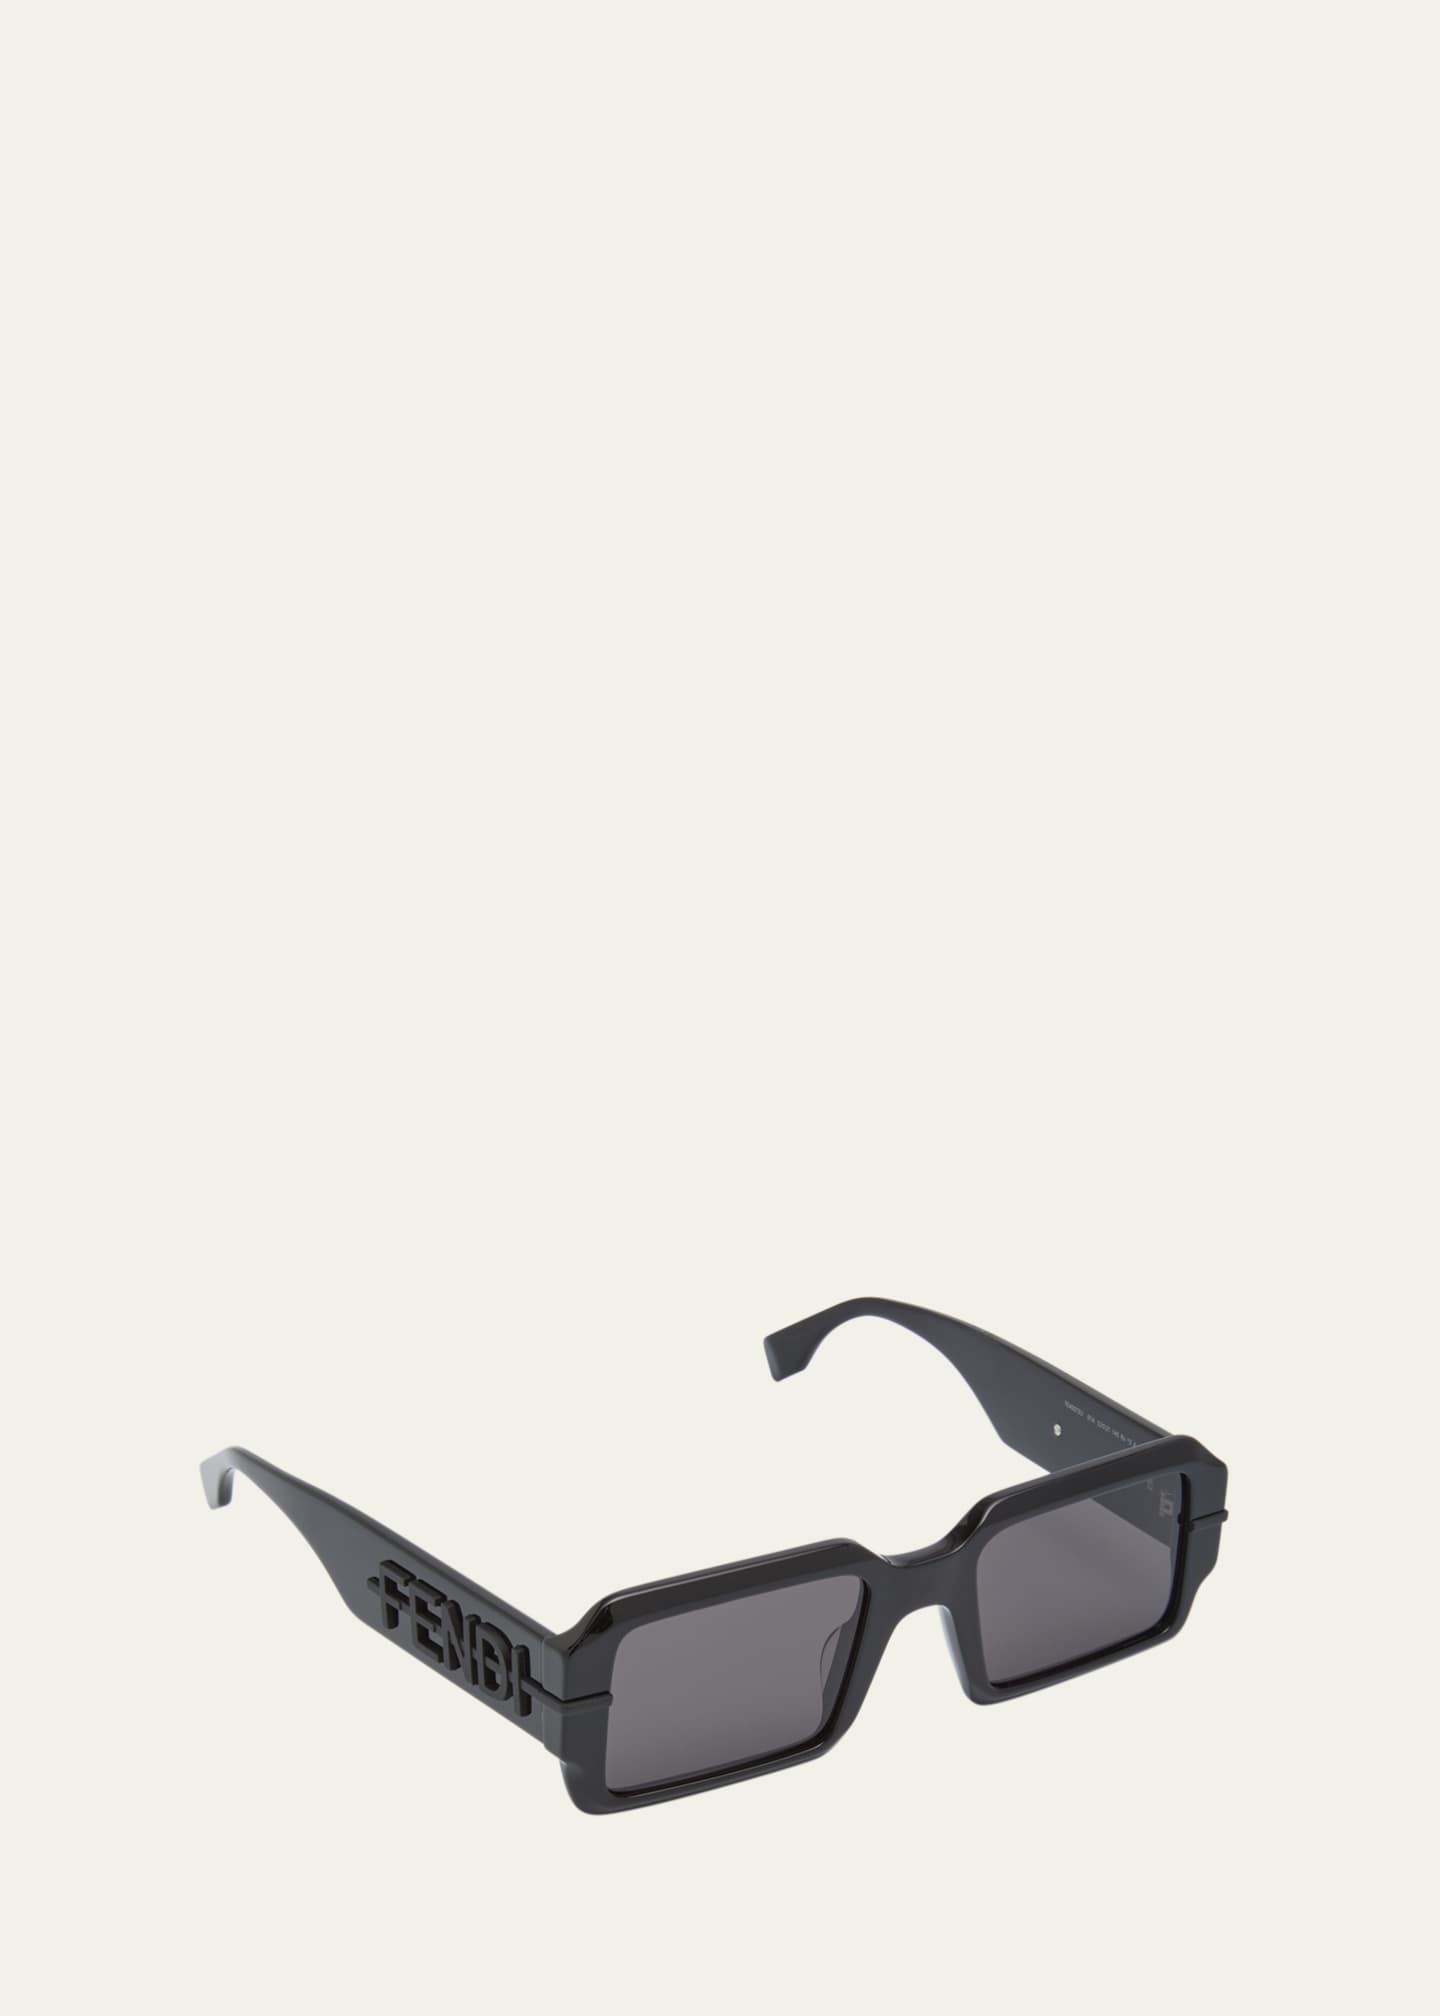 O Lock Rectangular Sunglasses in Black - Fendi